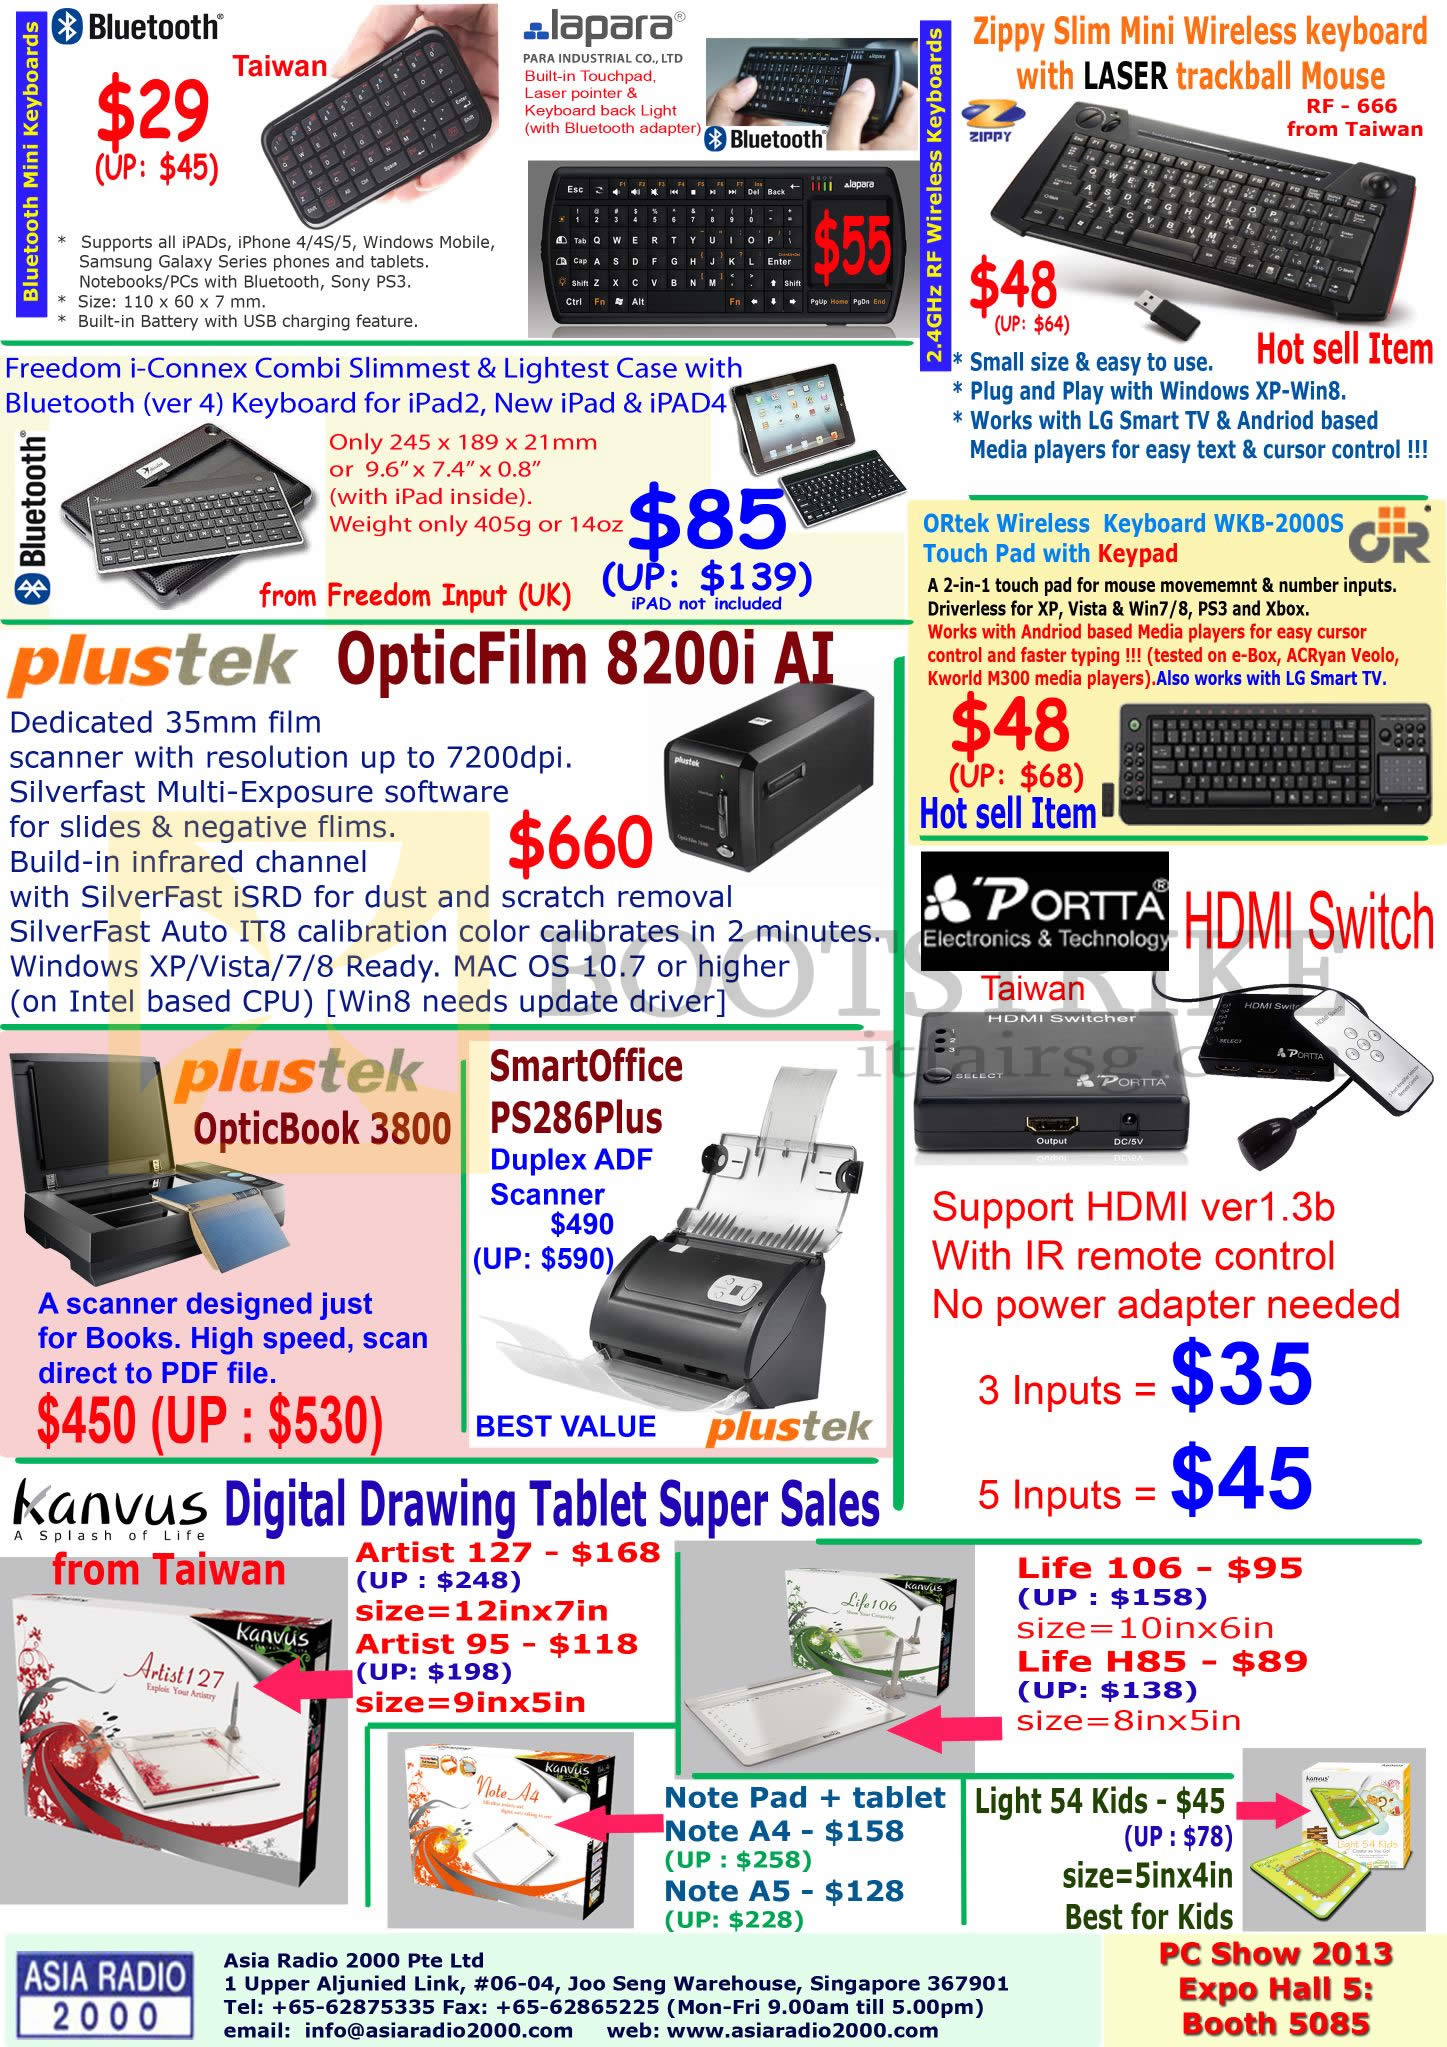 PC SHOW 2013 price list image brochure of Asia Radio Bluetooth Mini Keyboards, Lapara, Plustek OpticBook 3800 Scanner, OpticFilm 8200i AI, SmartOffice PS286Plus, Kanvus